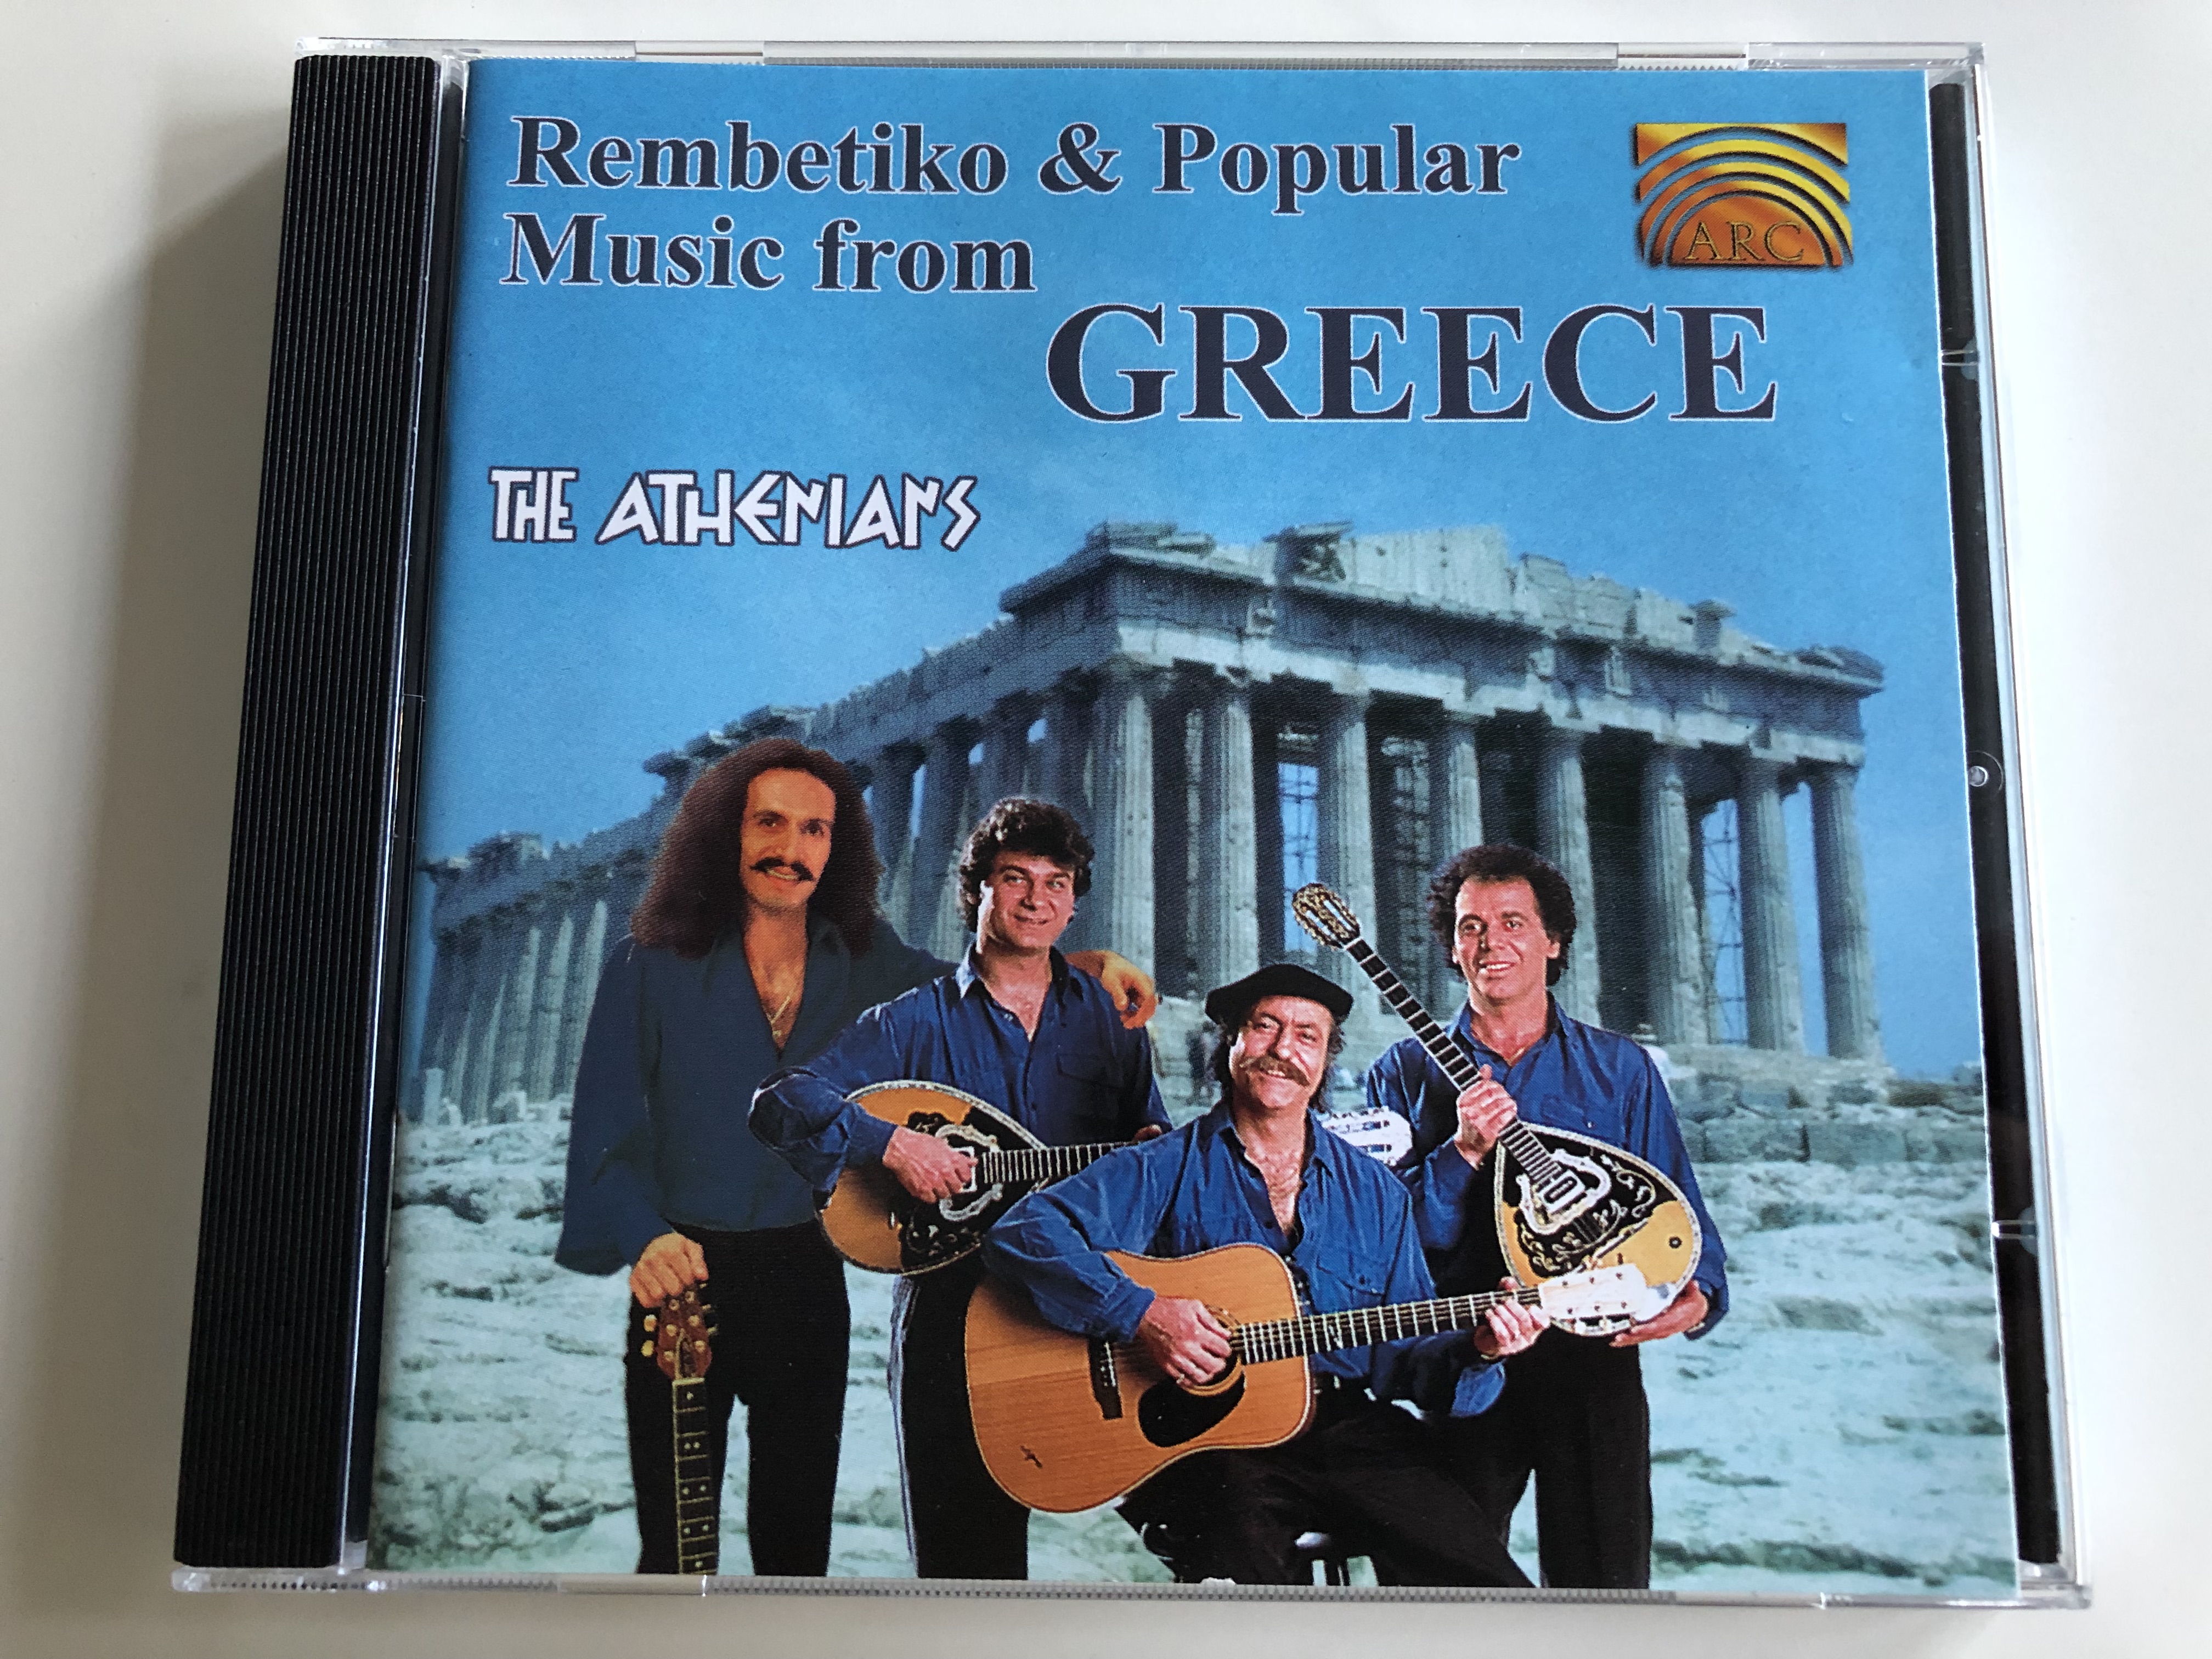 the-athenians-rembetiko-popular-music-from-greece-audio-cd-1998-eucd-1450-1-.jpg